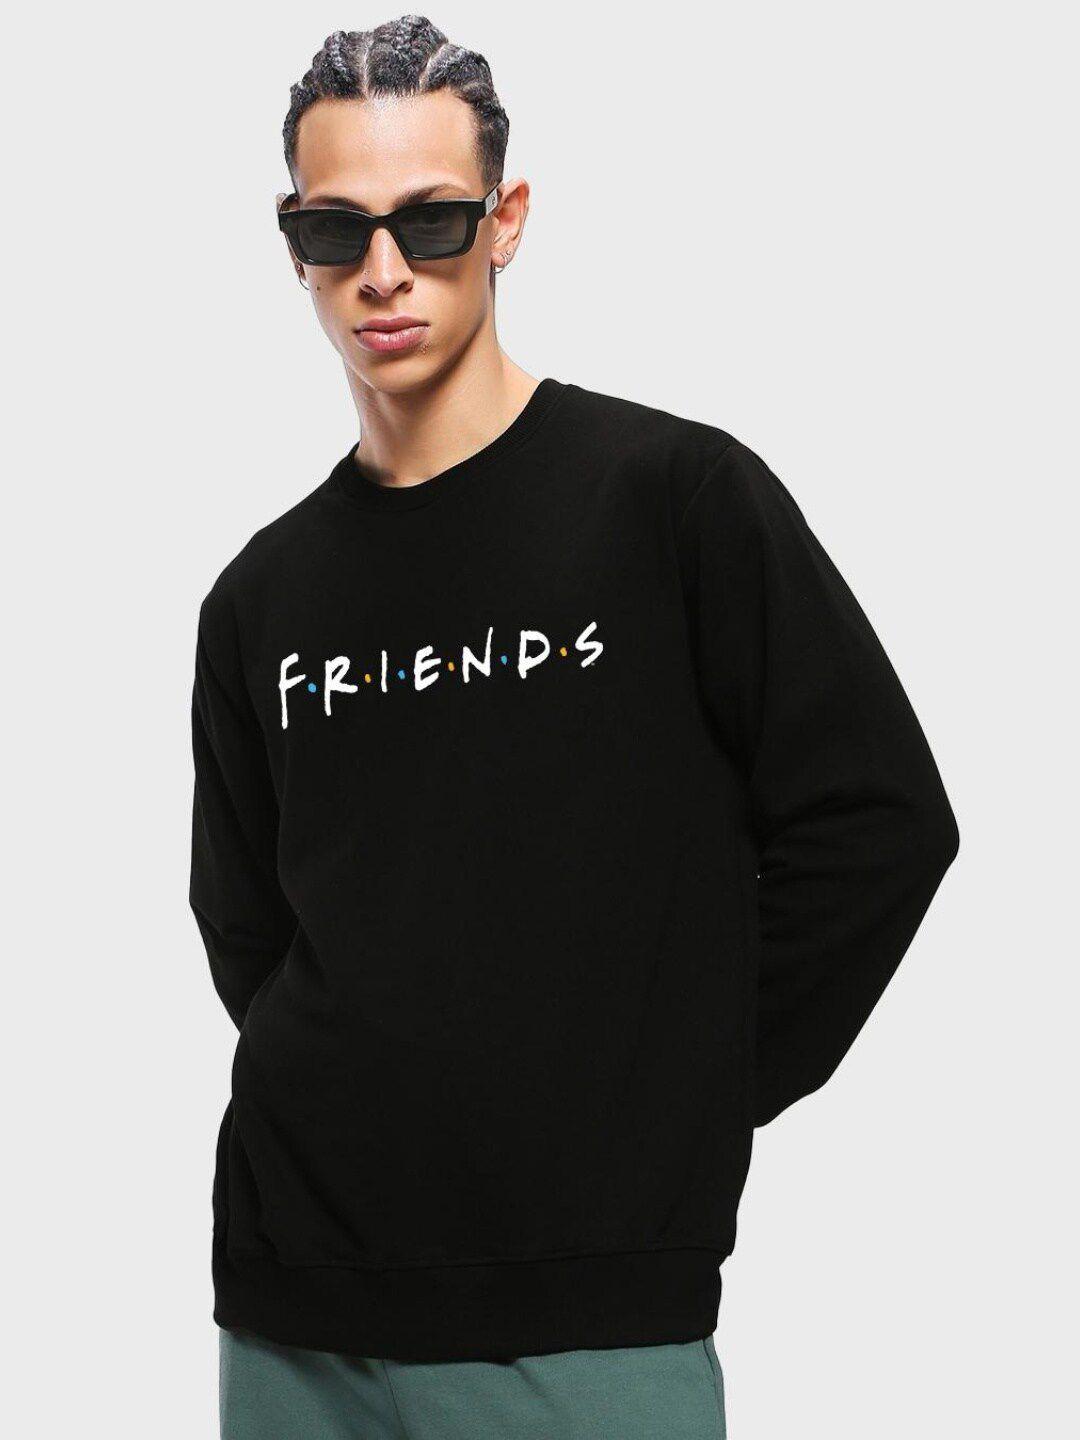 bewakoof men friends printed knitted pullover sweatshirt